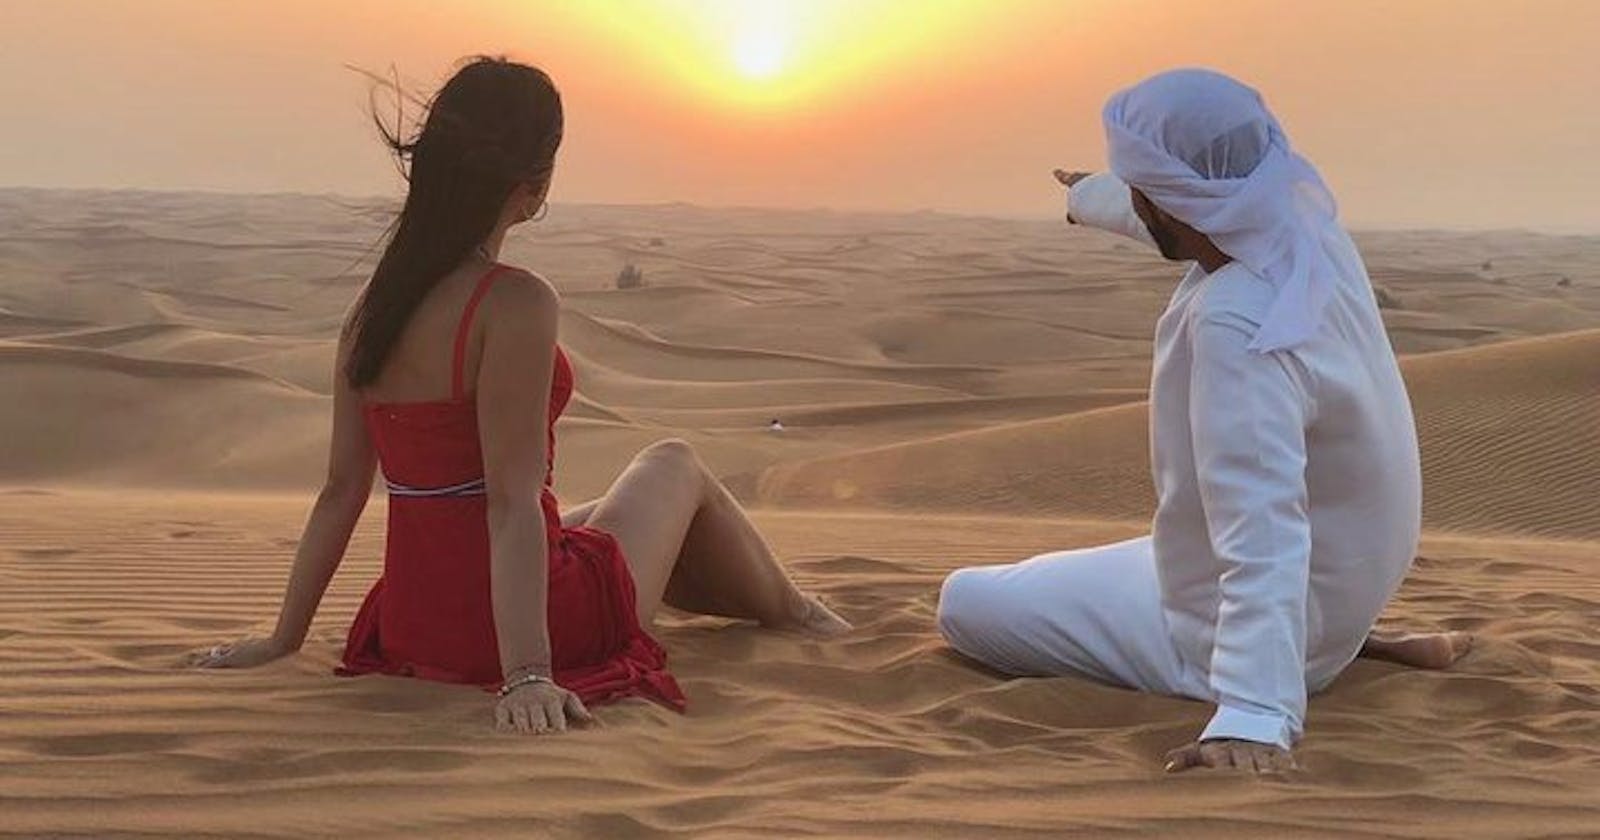 Abu Dhabi Desert Safari: A Journey Into the Heart of the Arabian Sands